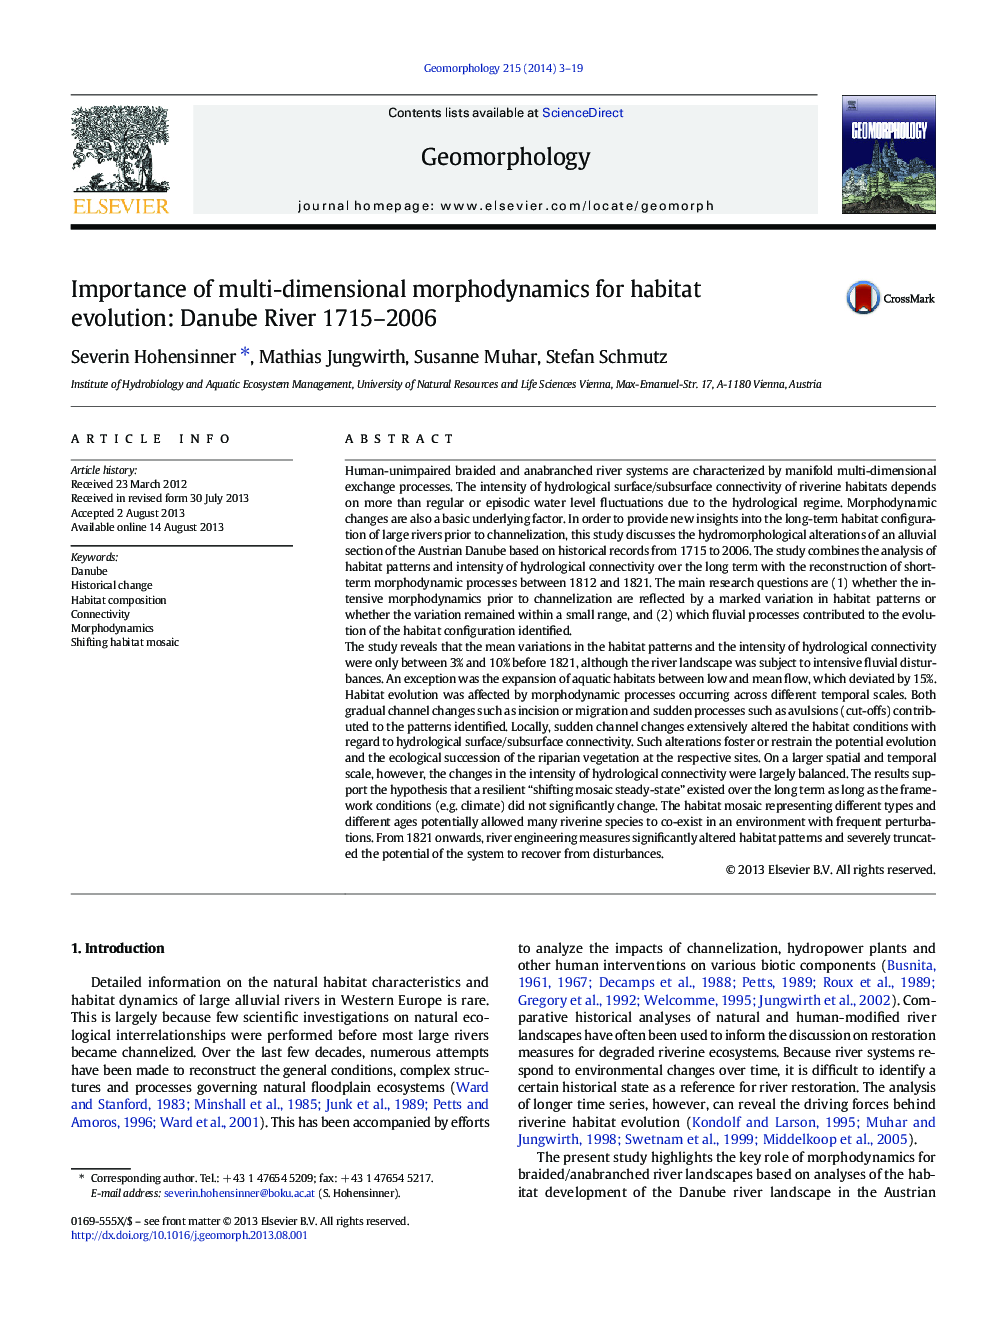 Importance of multi-dimensional morphodynamics for habitat evolution: Danube River 1715–2006